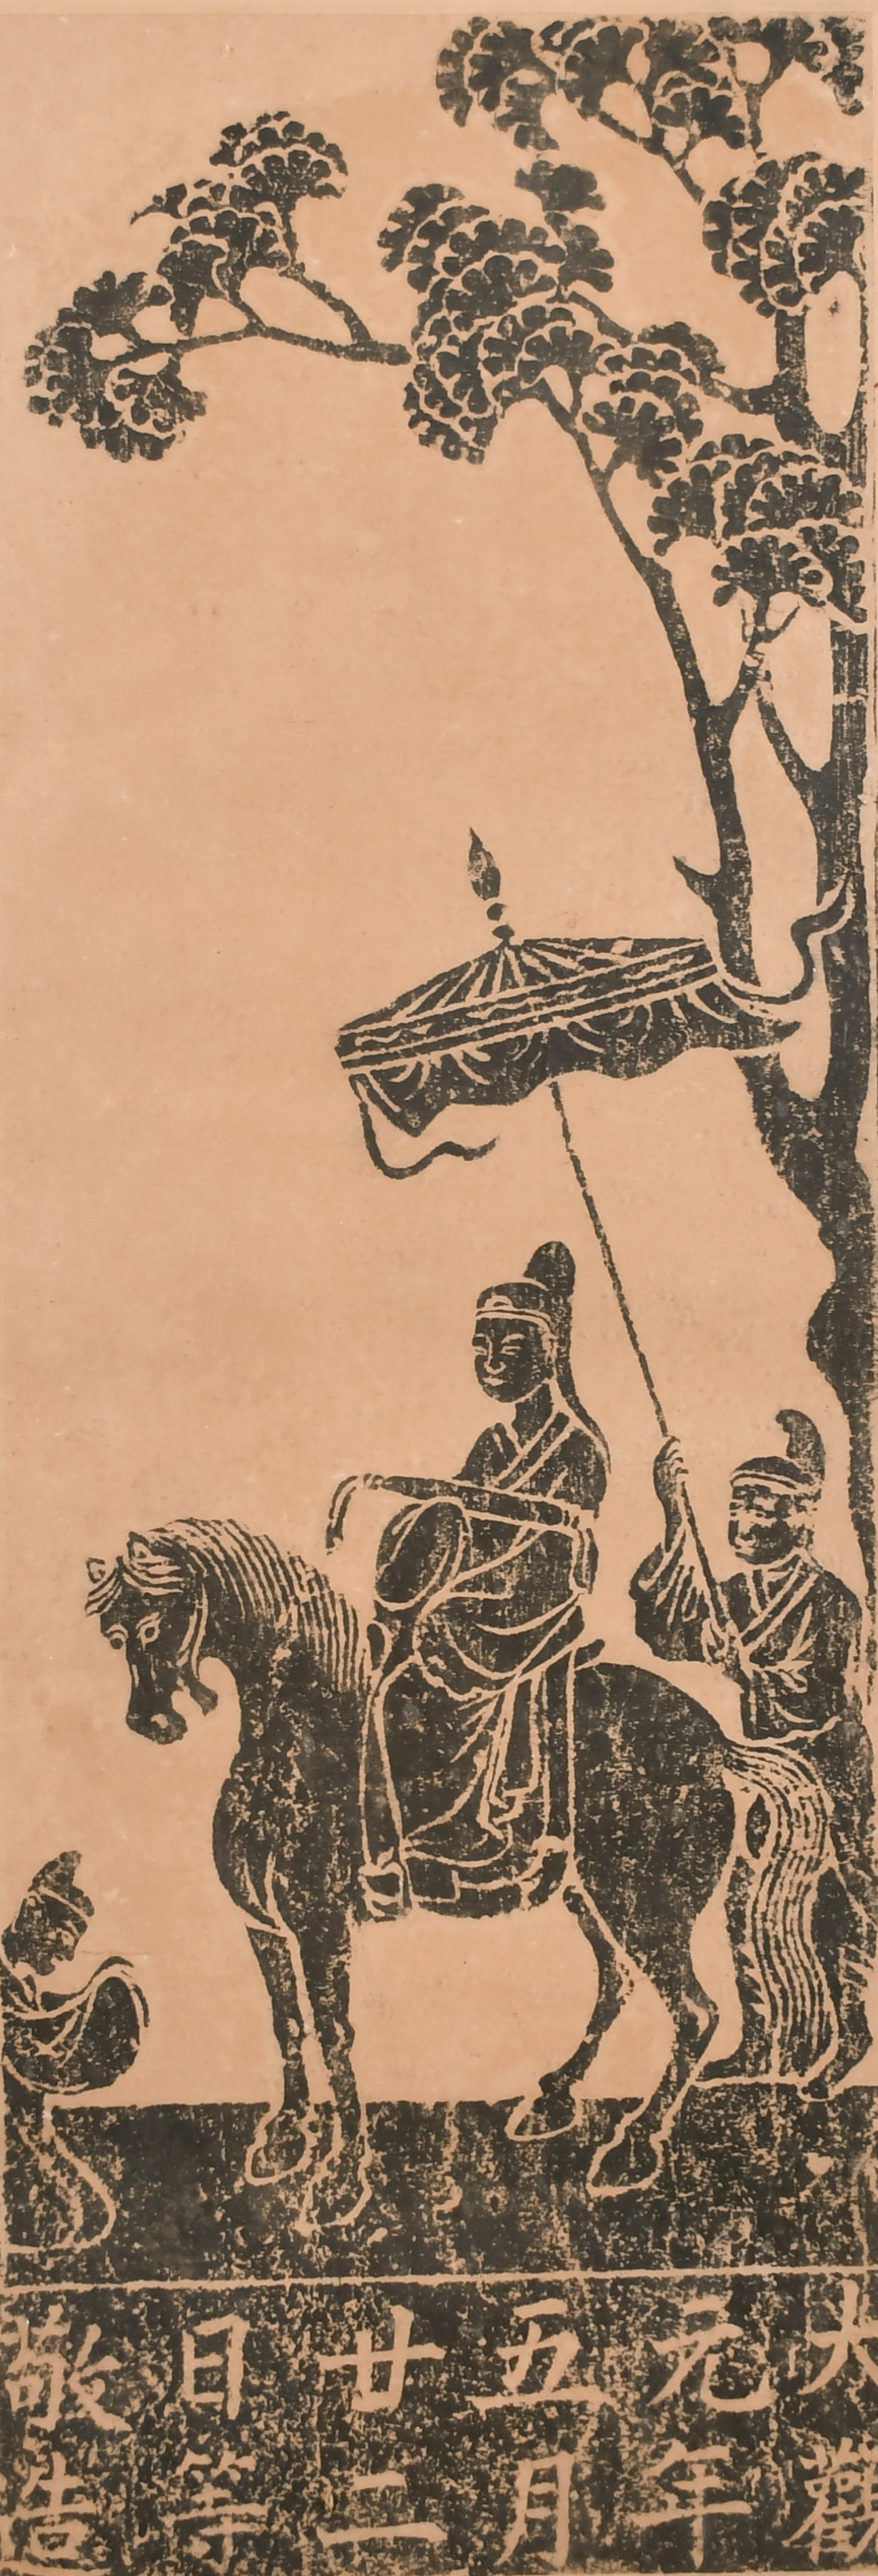 20th Century Japanese School. A Figure on Horseback, Print, 28.5” x 10” (72.3 x 25.4cm)